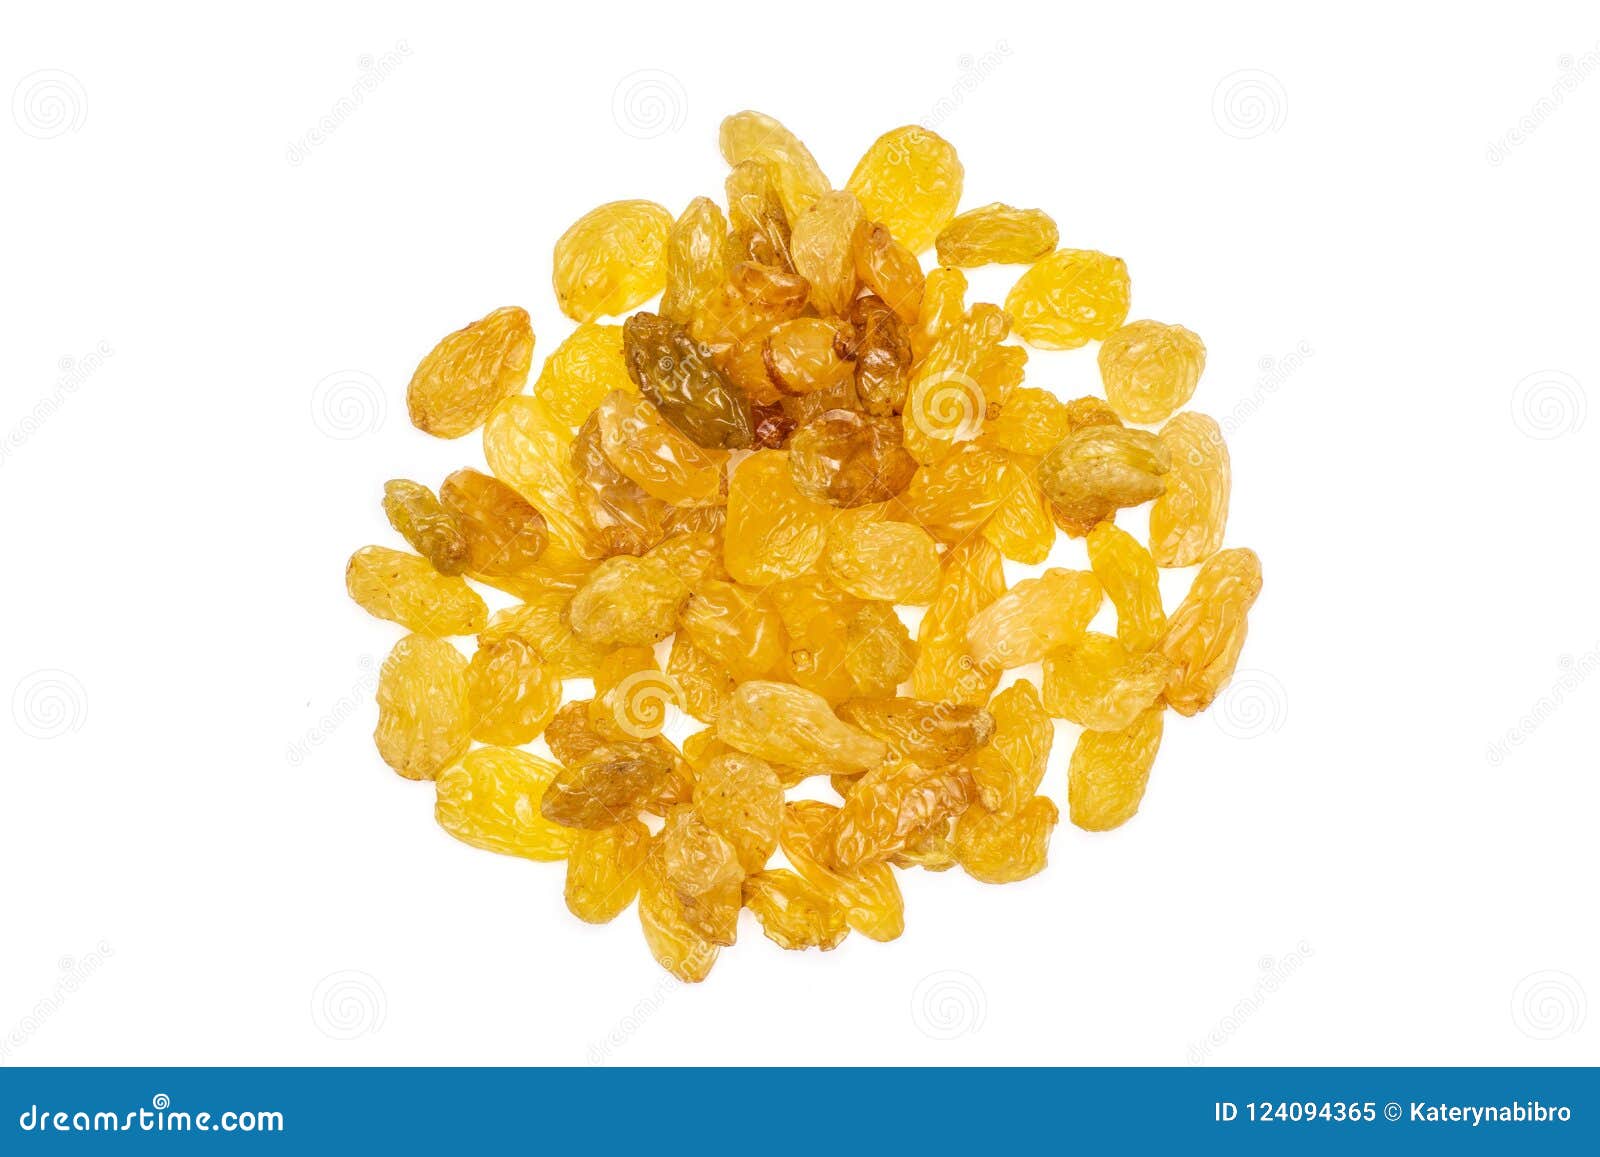 Dry Golden Raisins Sultana Isolated On White Stock Image - Image of ...